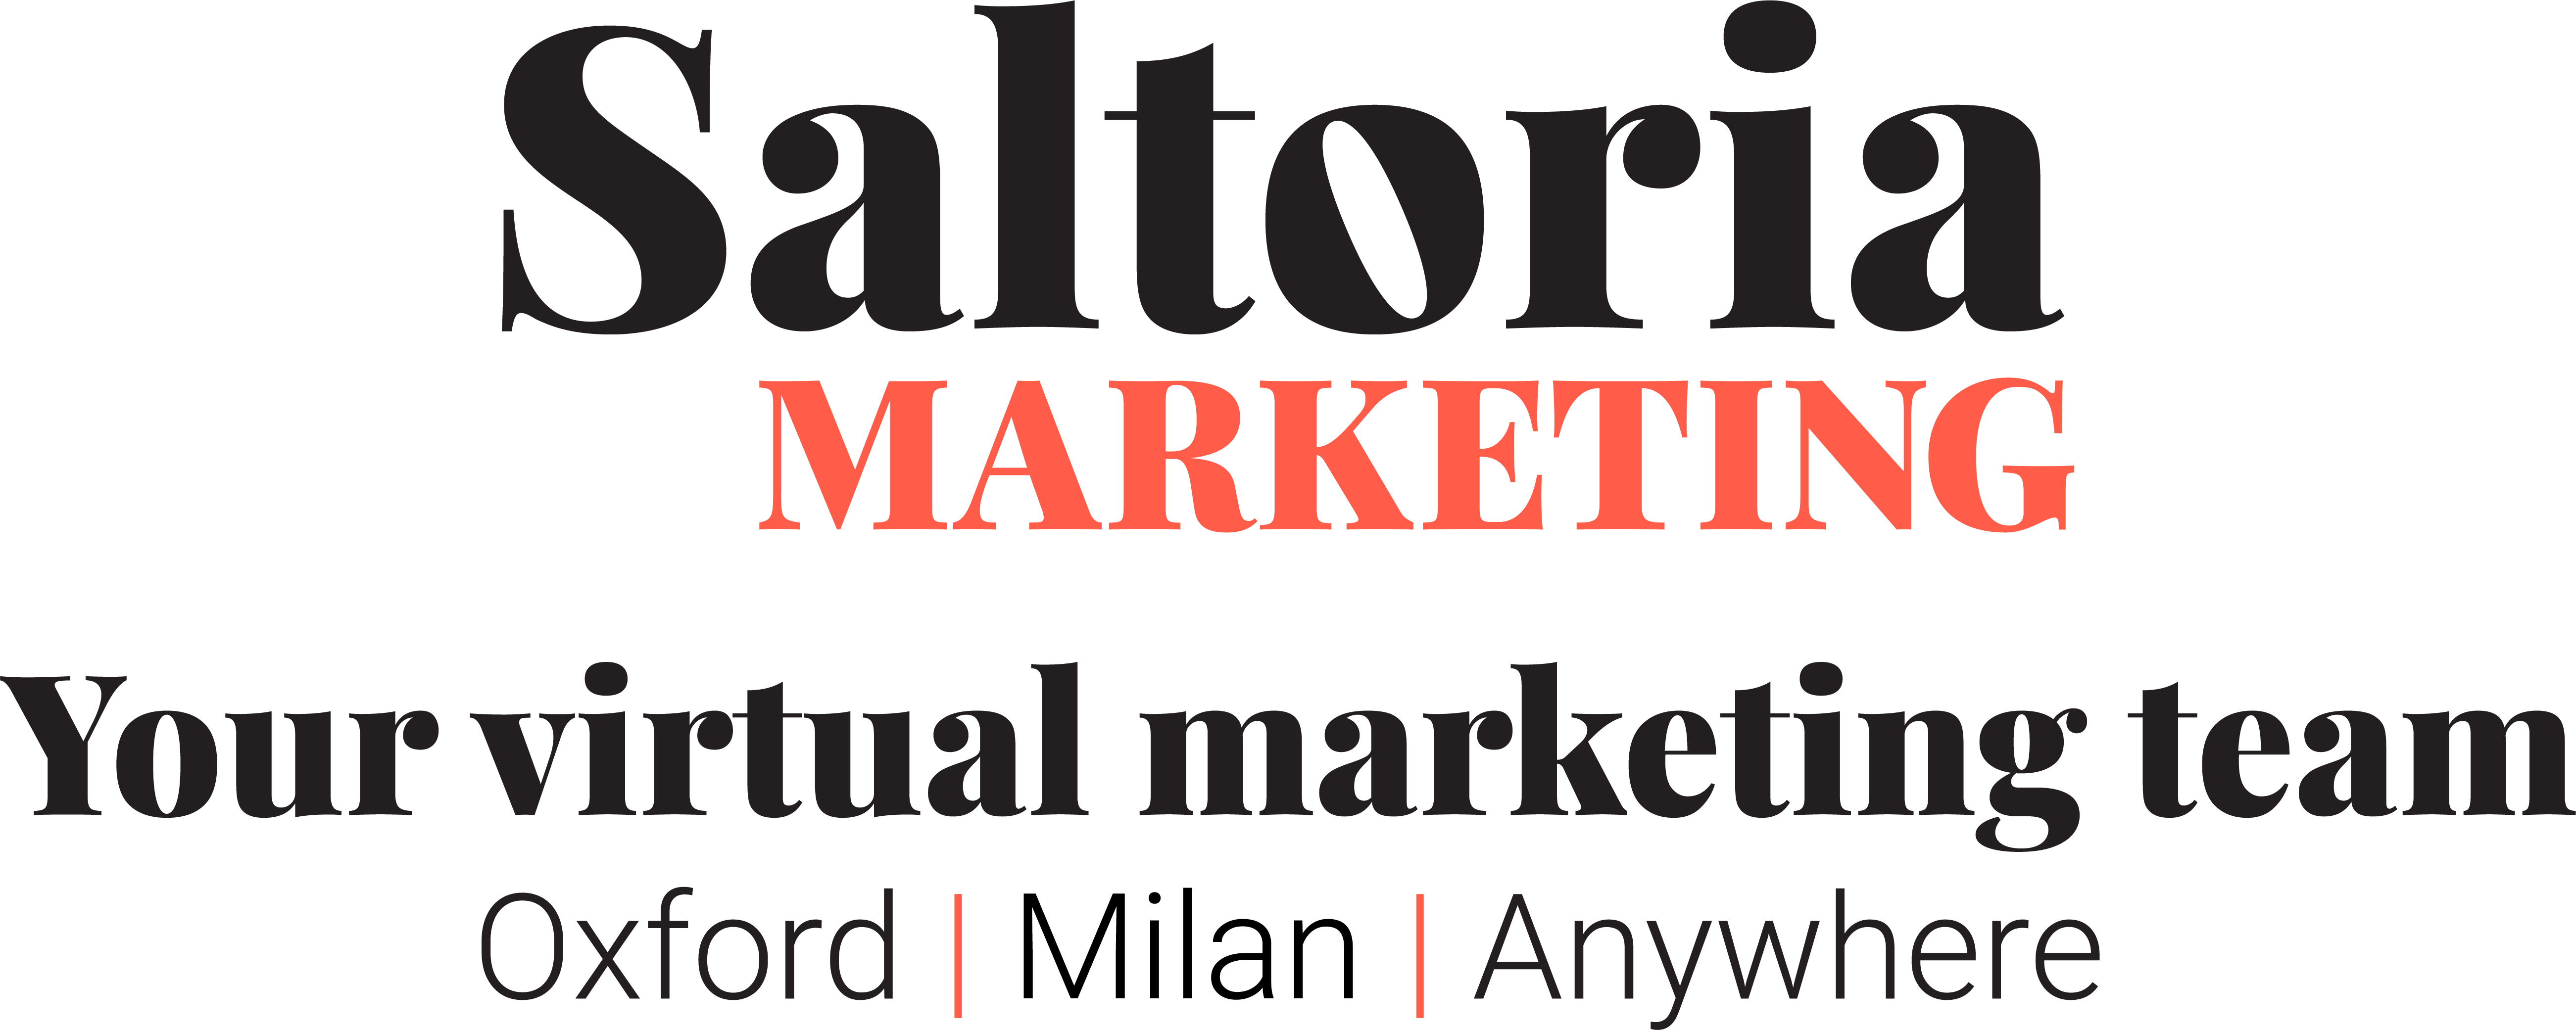 Saltoria Marketing - Your Virtual Marketing Team (Oxford, Milan, Anywhere)